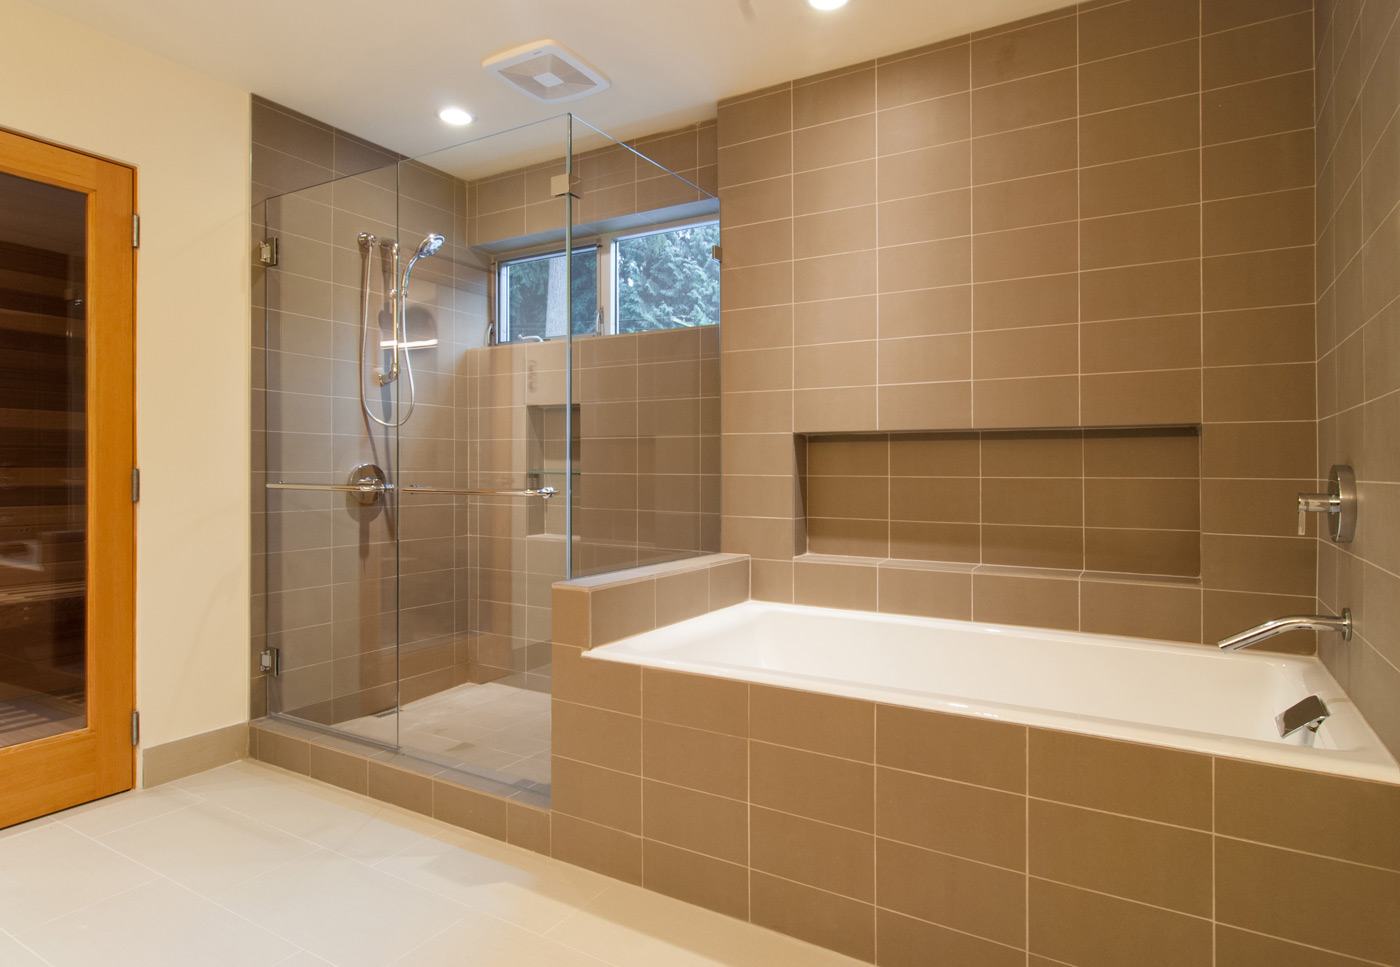 Luxury-tile-bathroom-accessories-and-bathroom-greats-elegant-brown-wall-ceramics-tile-bathroom-with-elegance-bathtub-shower-doors-decorative-tile-bathroom-ideas-for-your-home